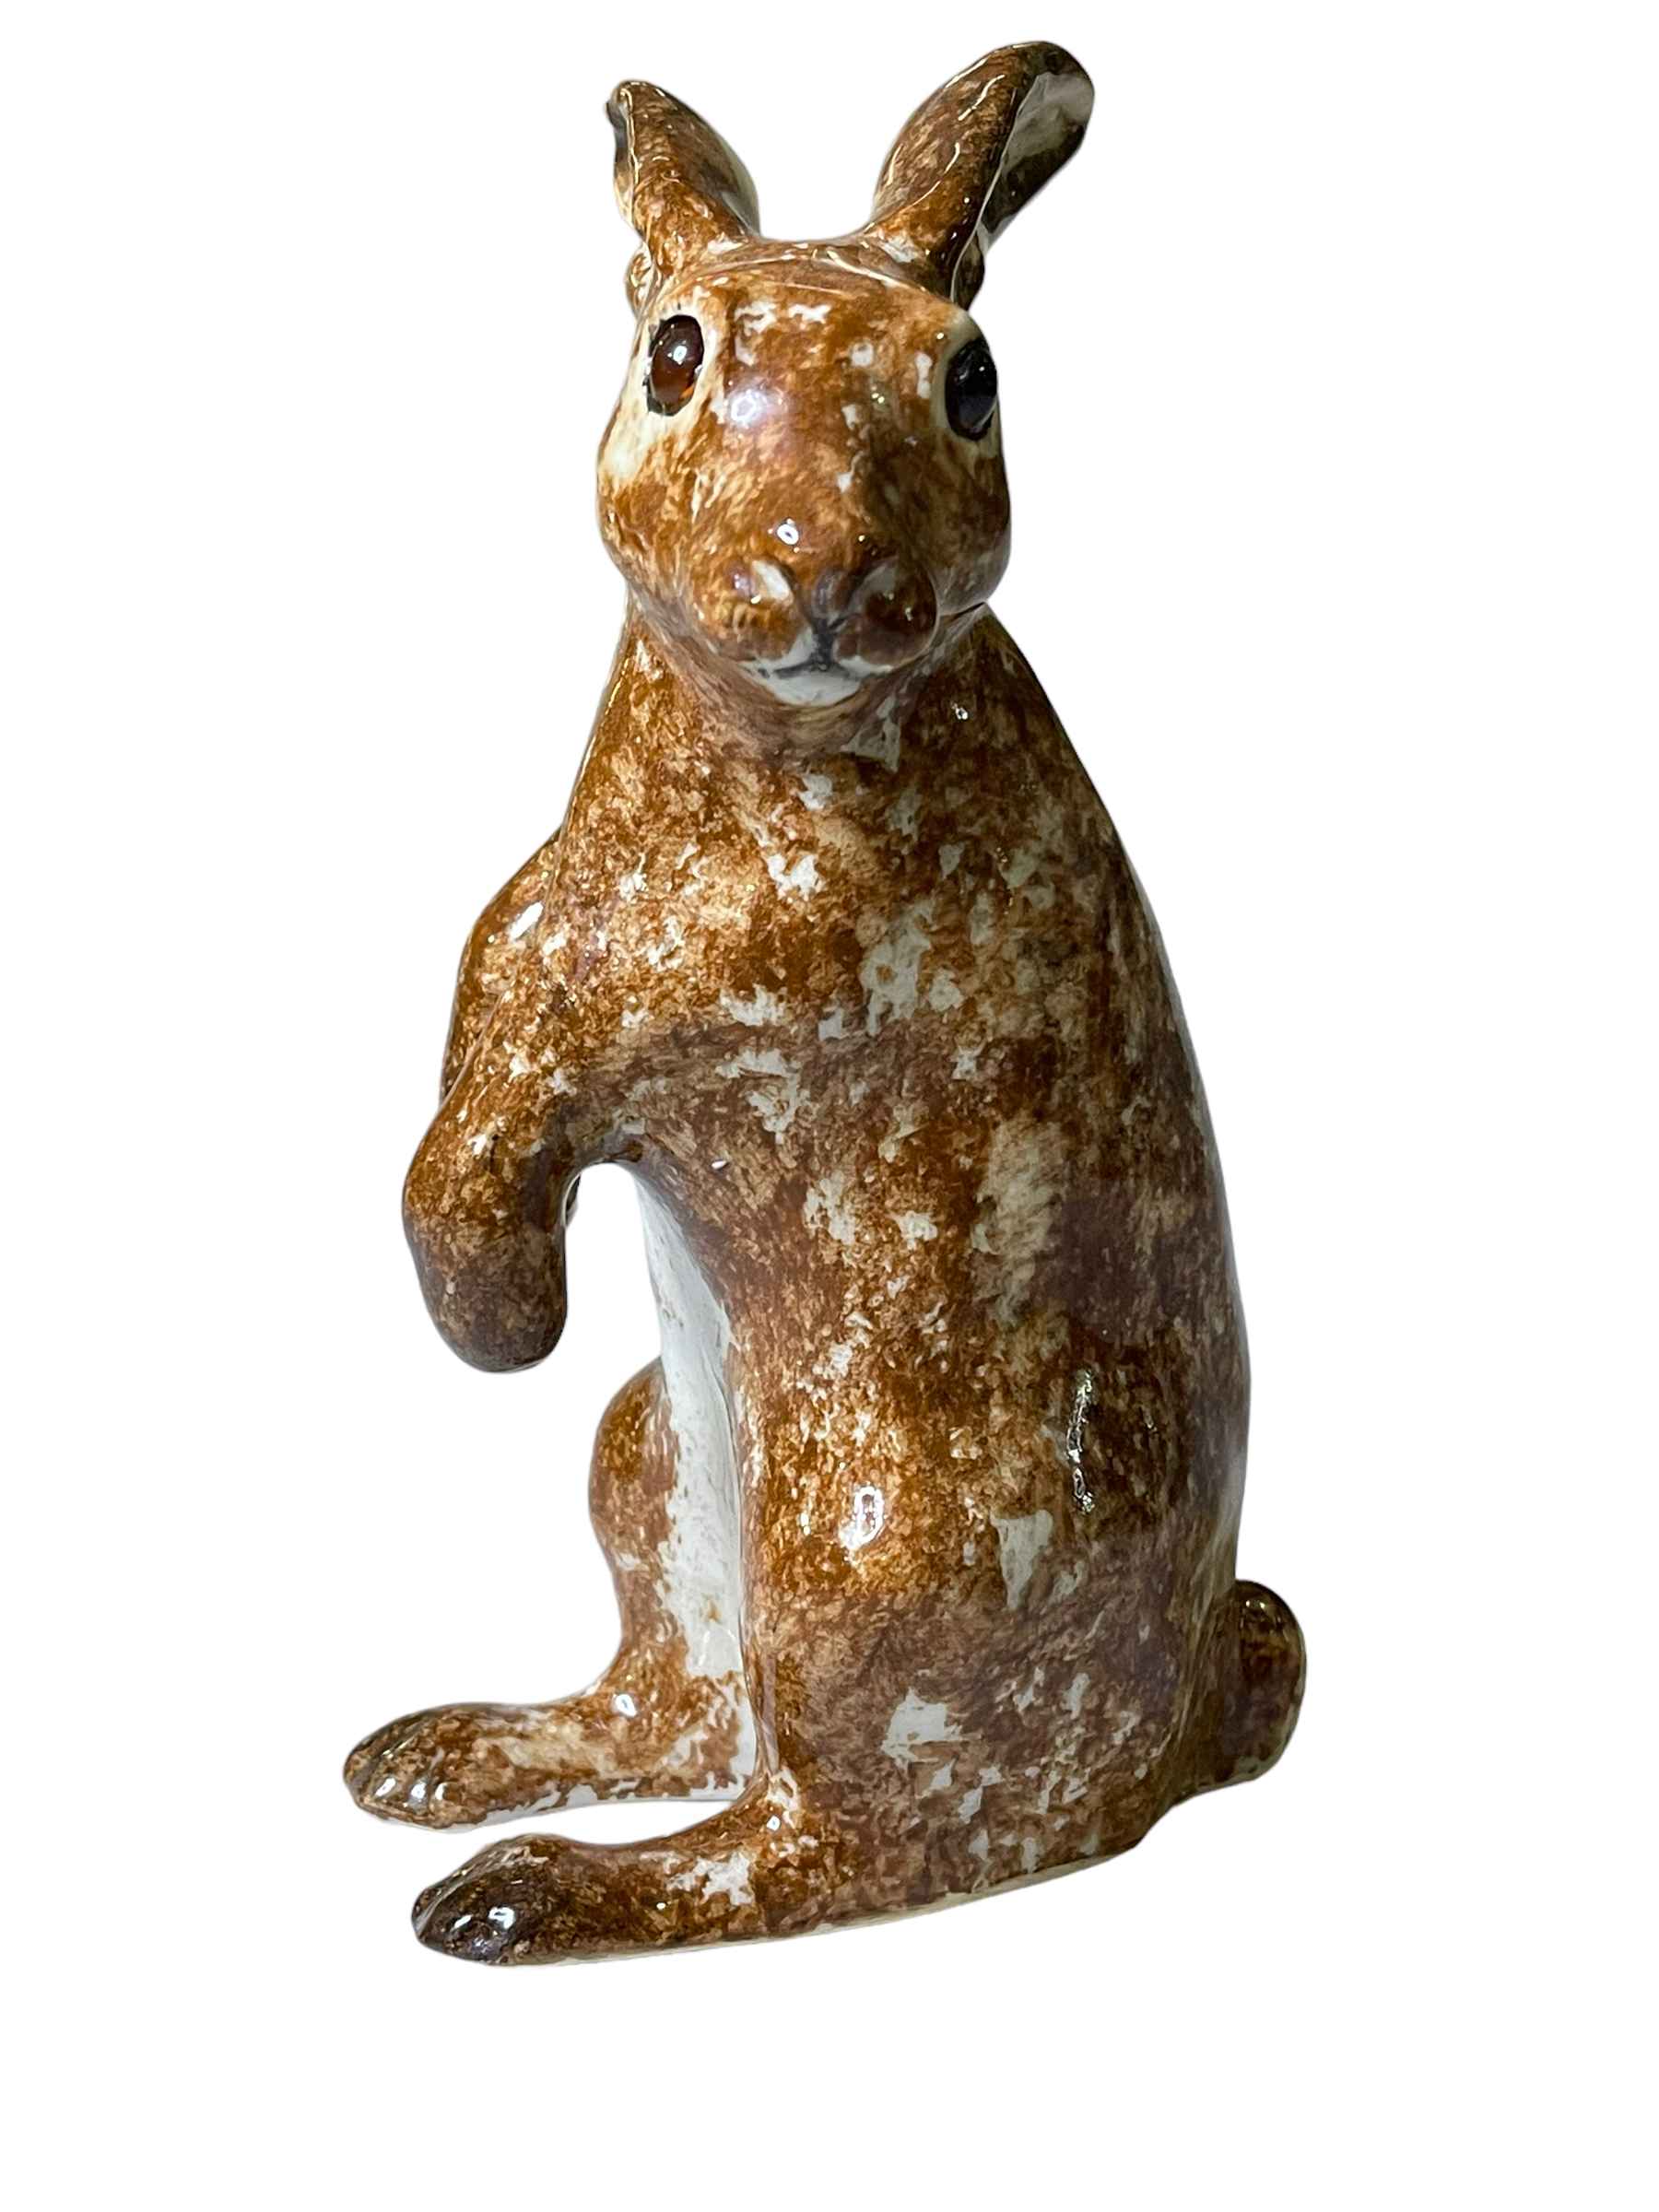 Winstanley hare, size 3.